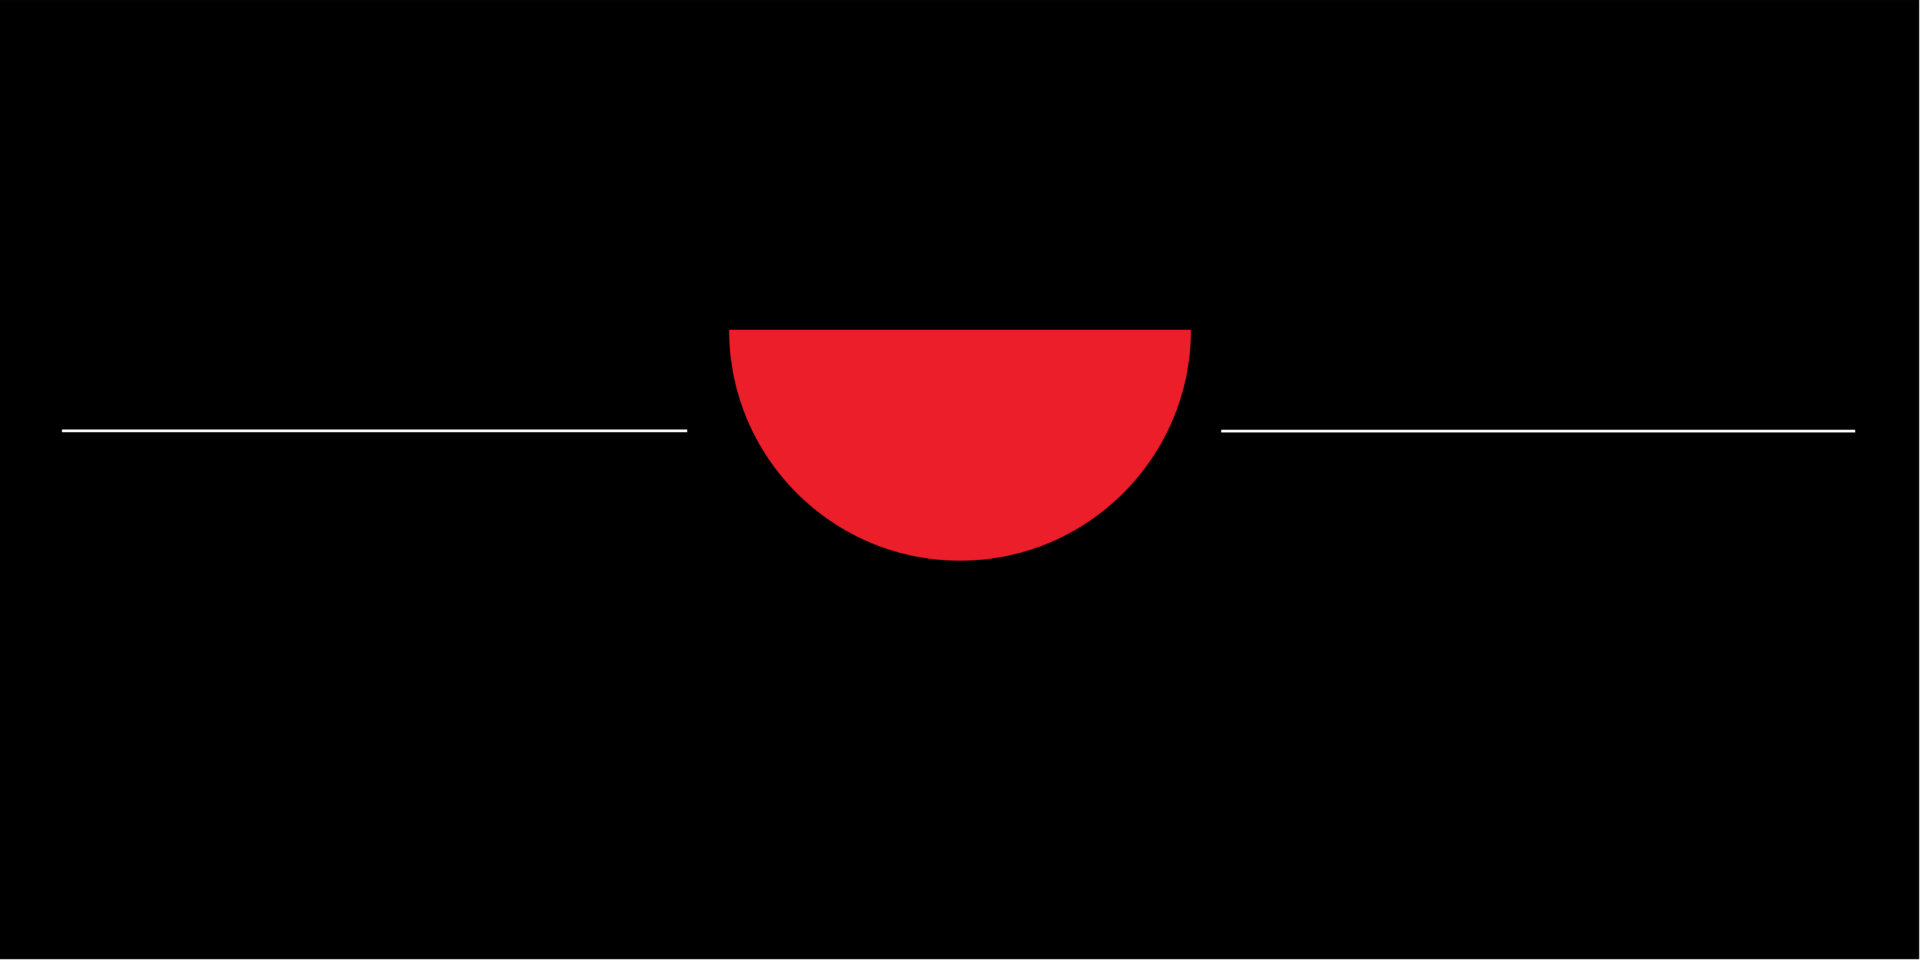 A red Smile Politely logo on a black backdrop